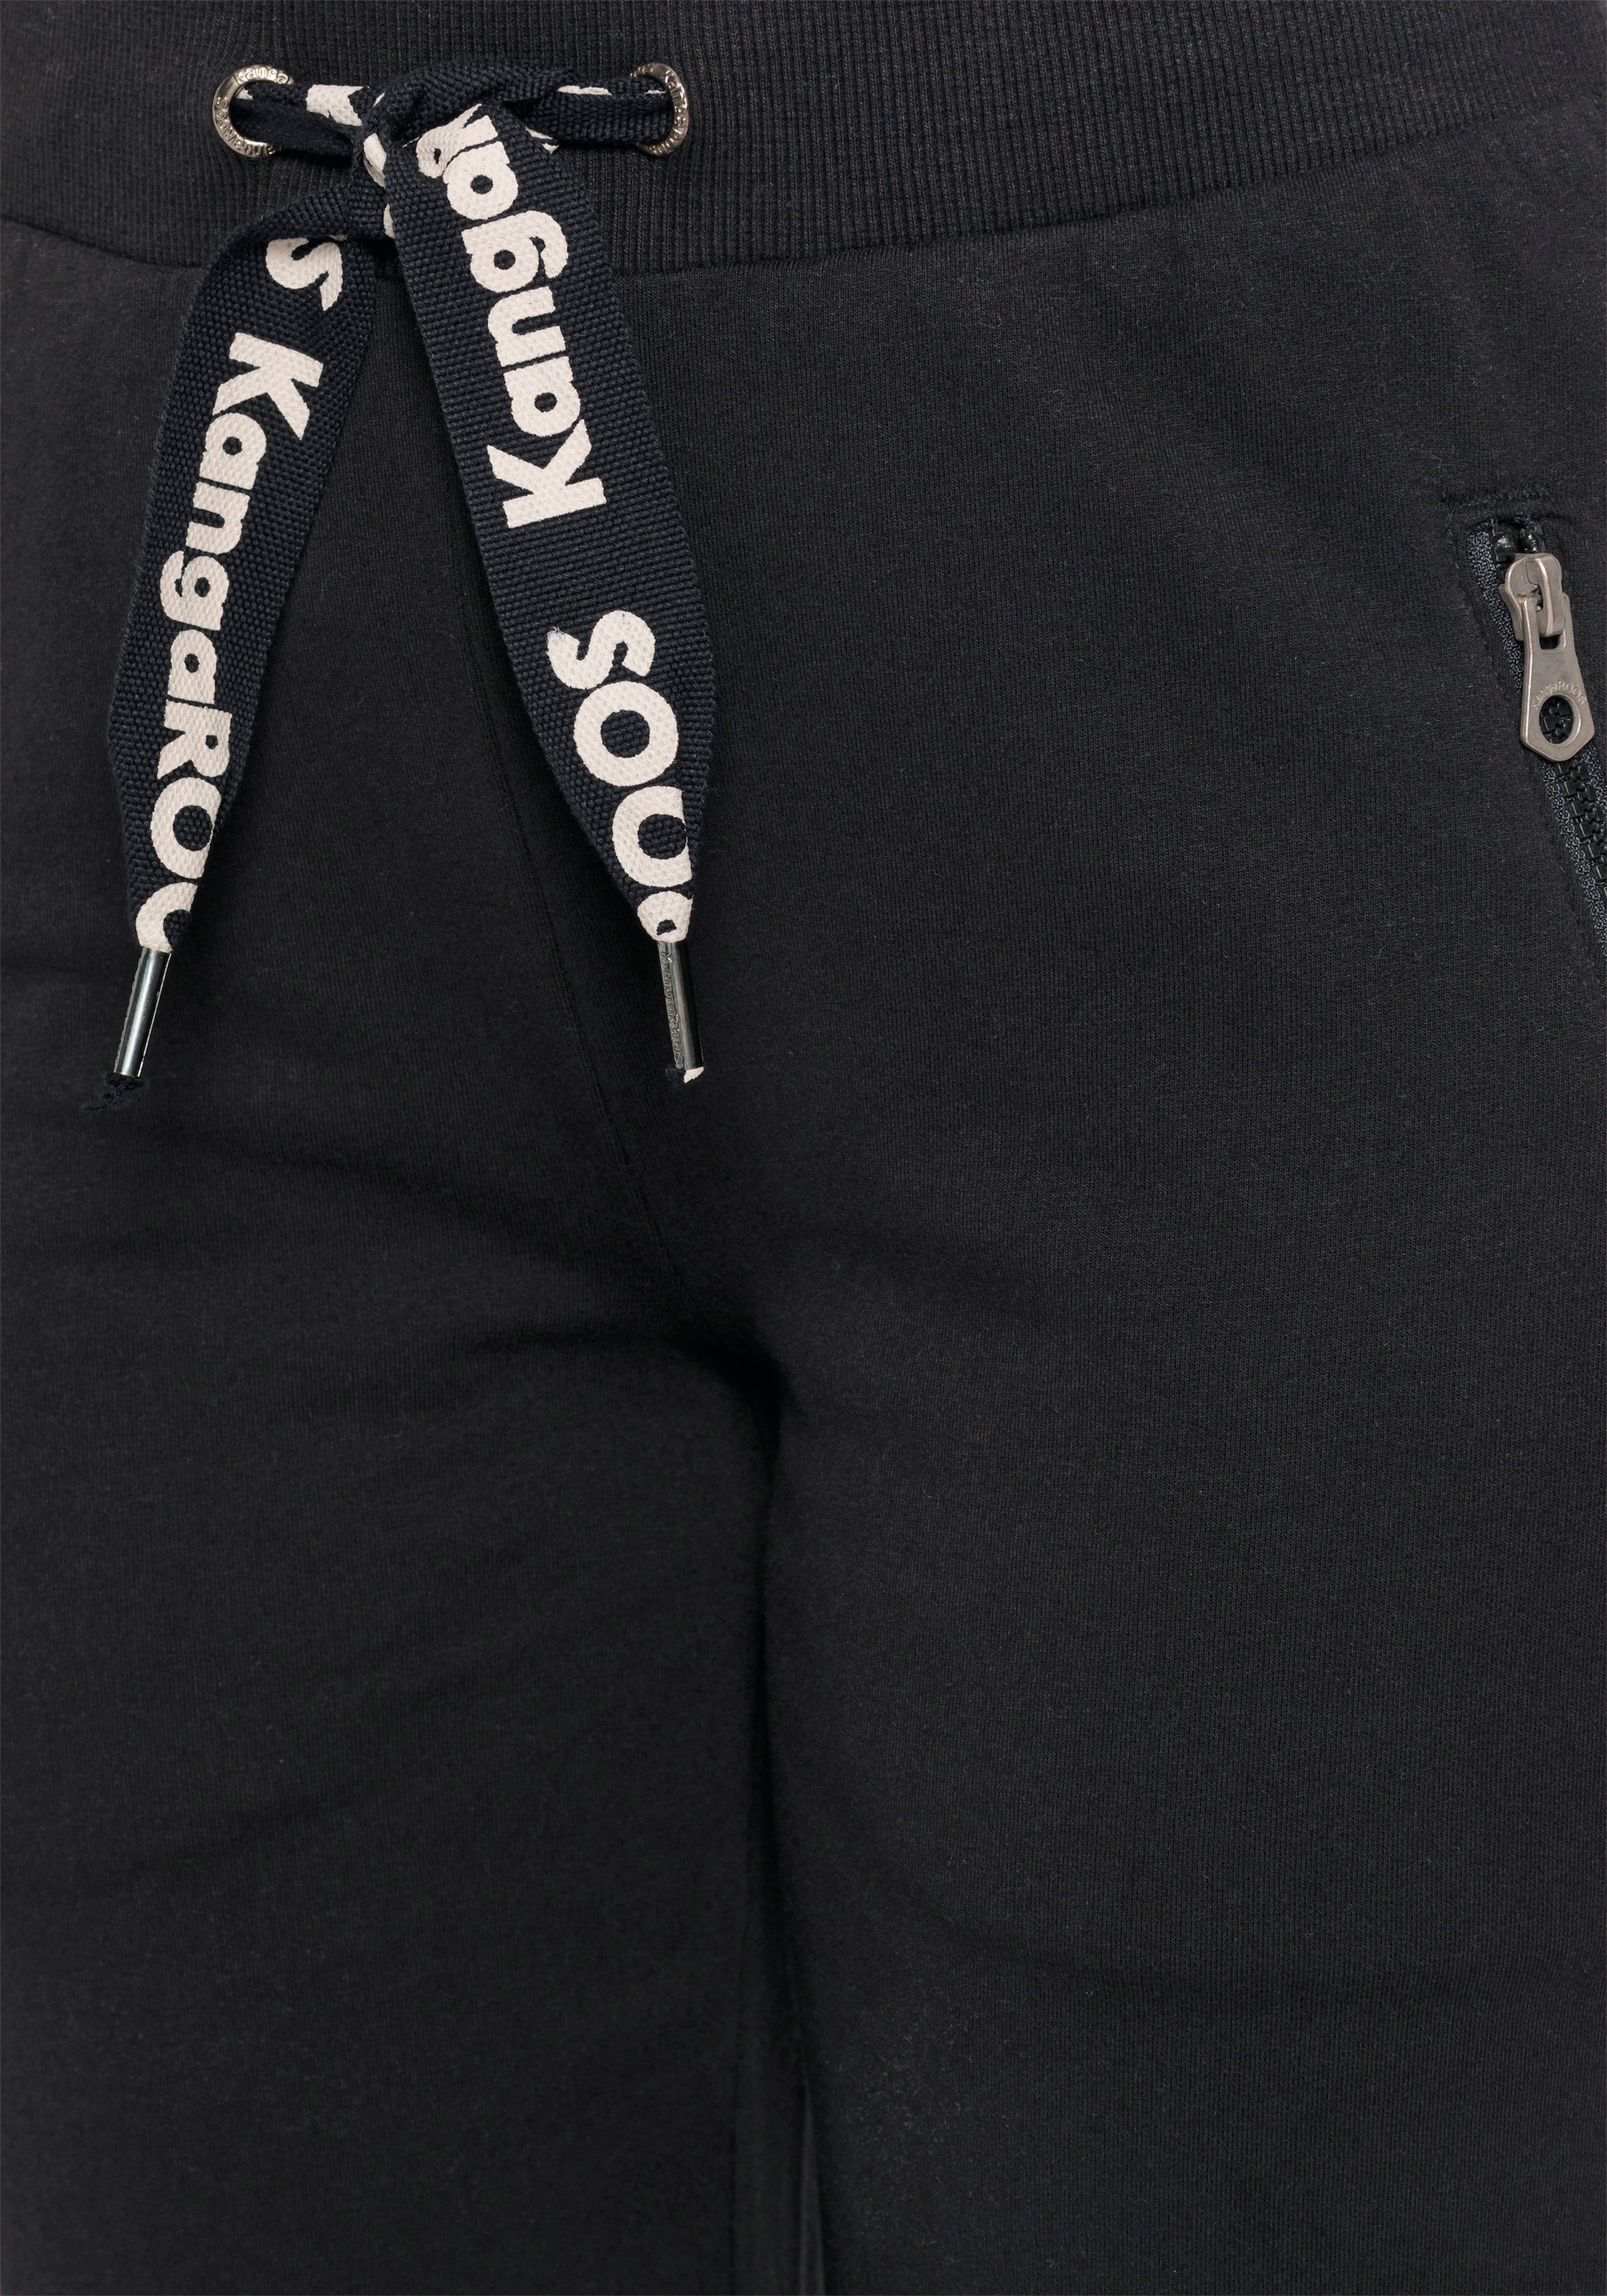 Pants, KangaROOS Sweatpants Jogger String Zippertaschen Logo KOLLEKTION mit und bestellen -NEUE Jetzt